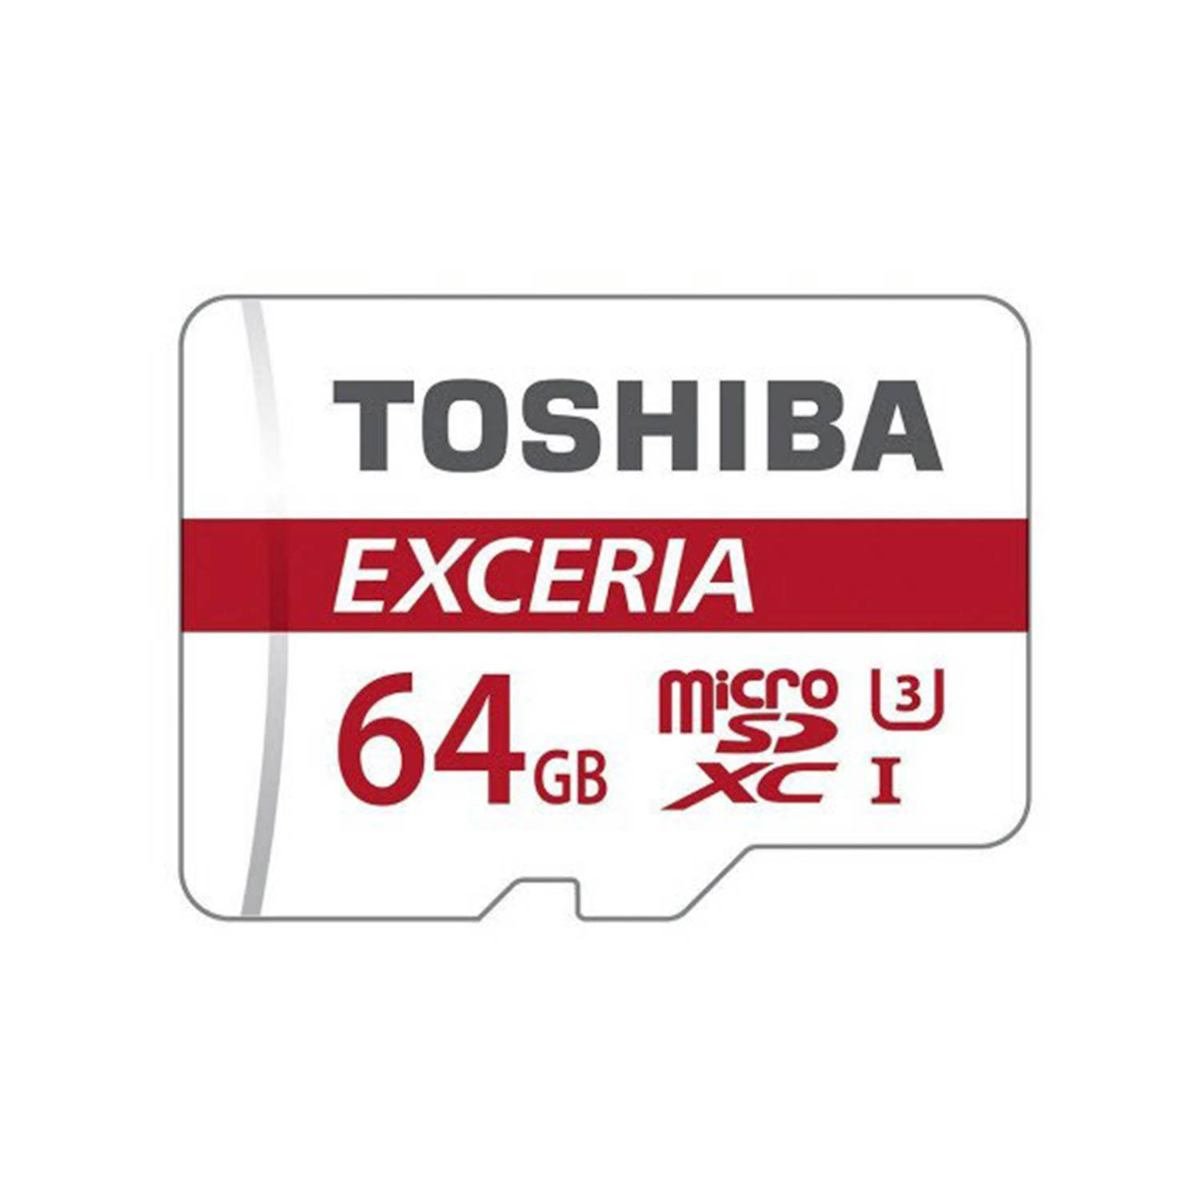 Toshiba Micro SD CardM302R0640 64GB